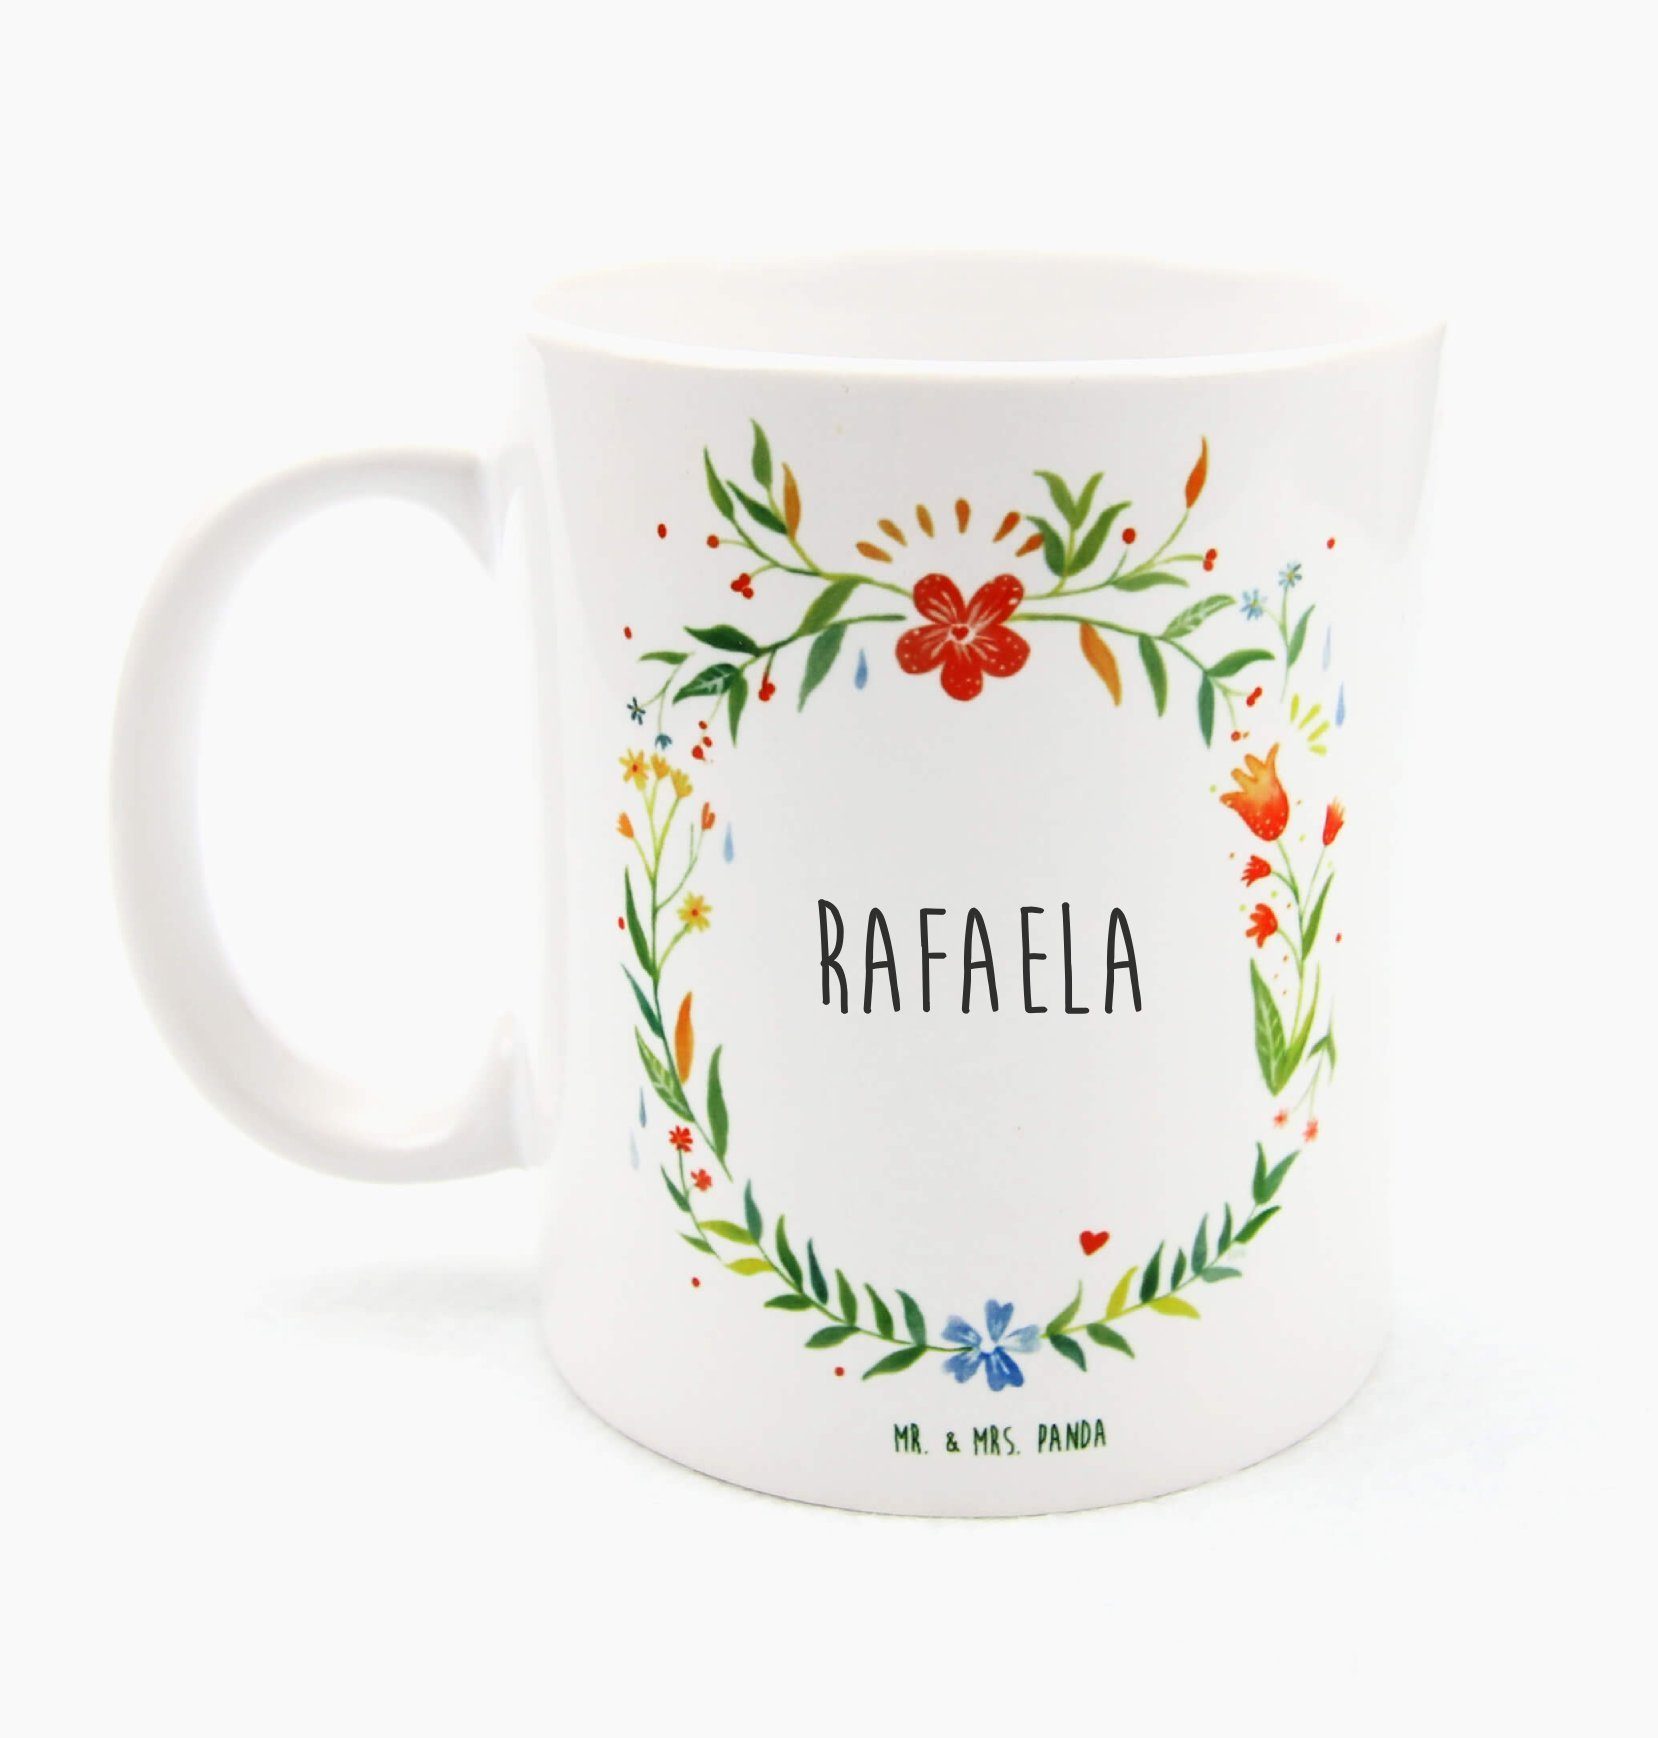 Mr. & Mrs. Panda Tasse Rafaela - Geschenk, Kaffeebecher, Tasse Motive, Geschenk Tasse, Tasse, Keramik